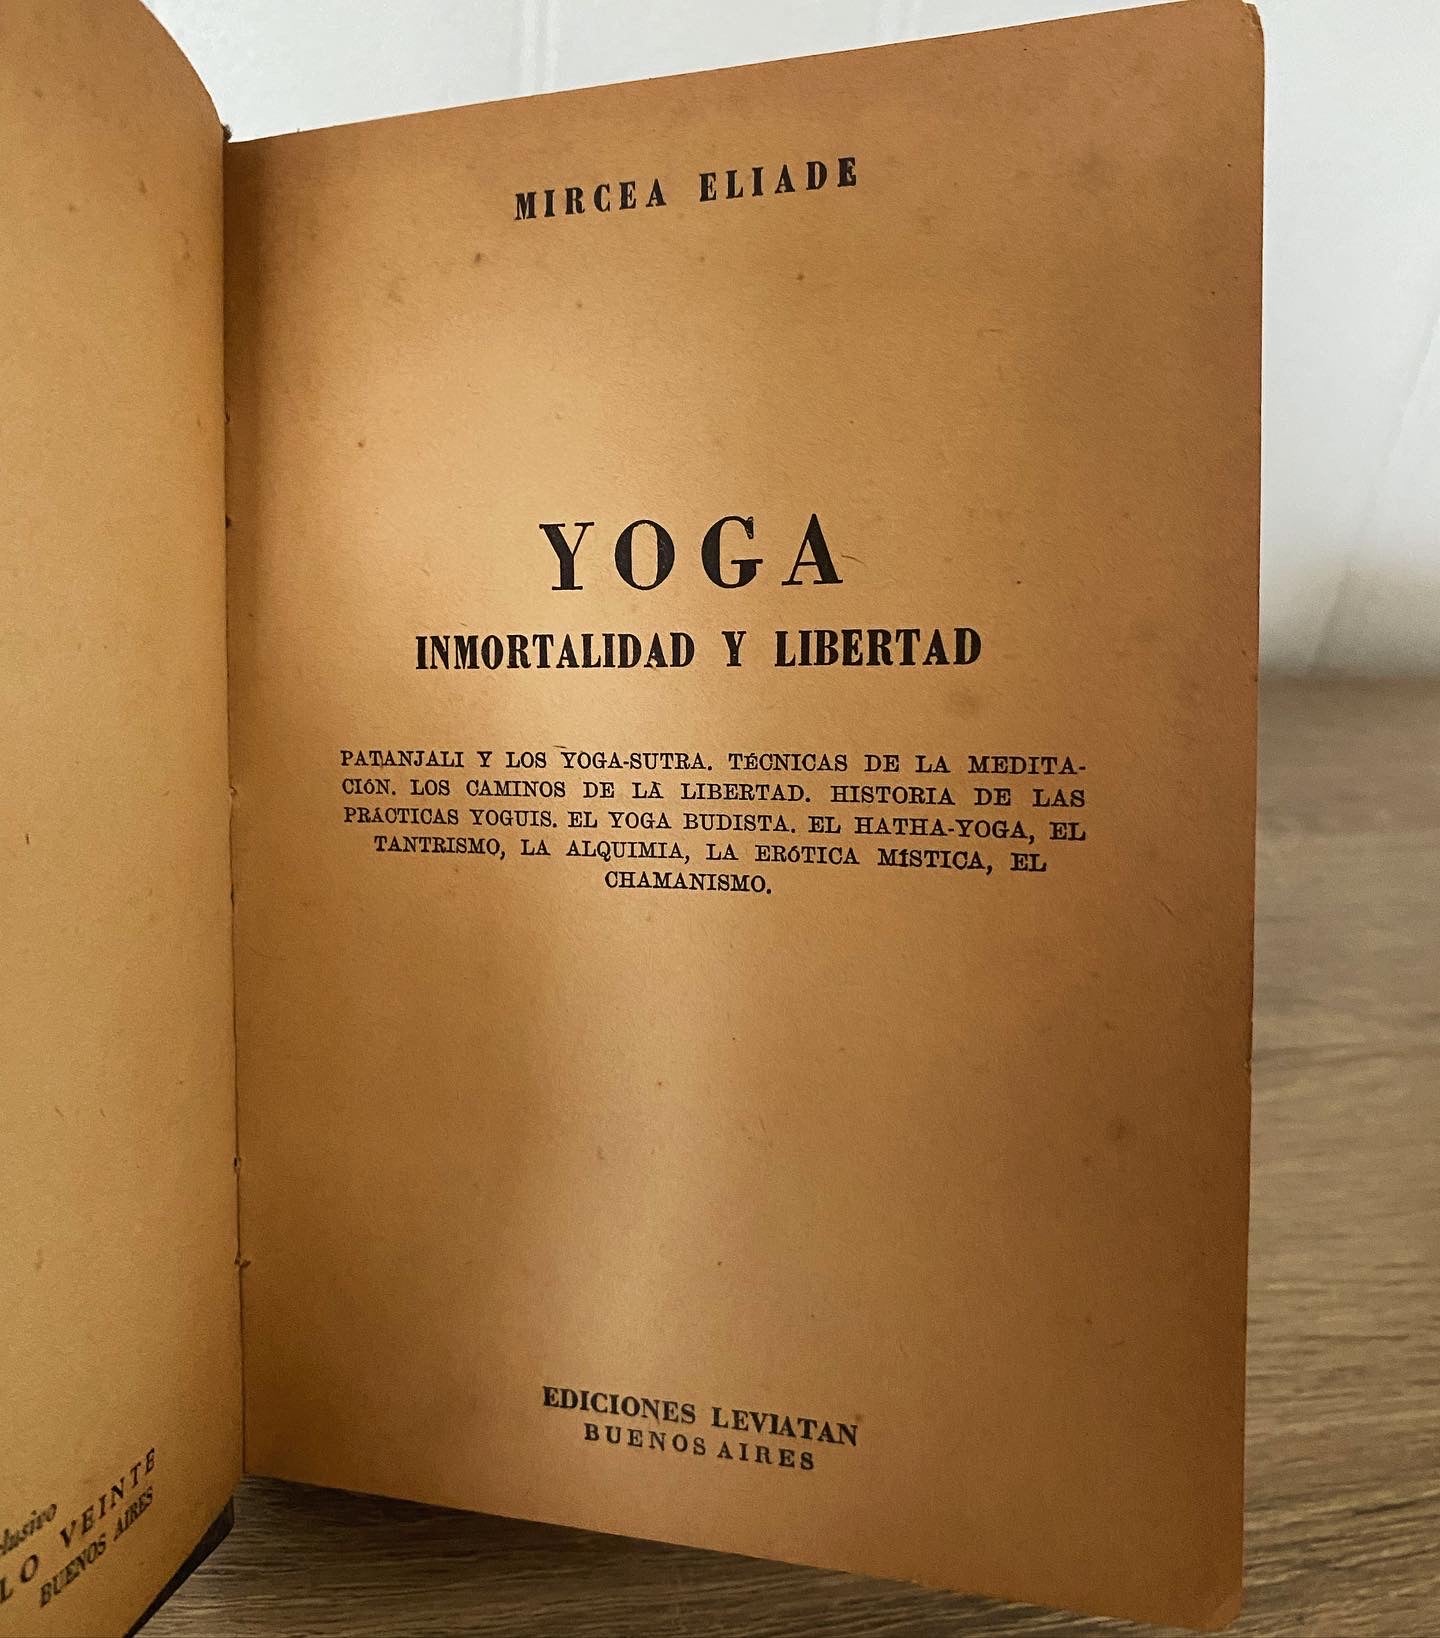 Yoga, inmortalidad y libertad, Mircea Eliade